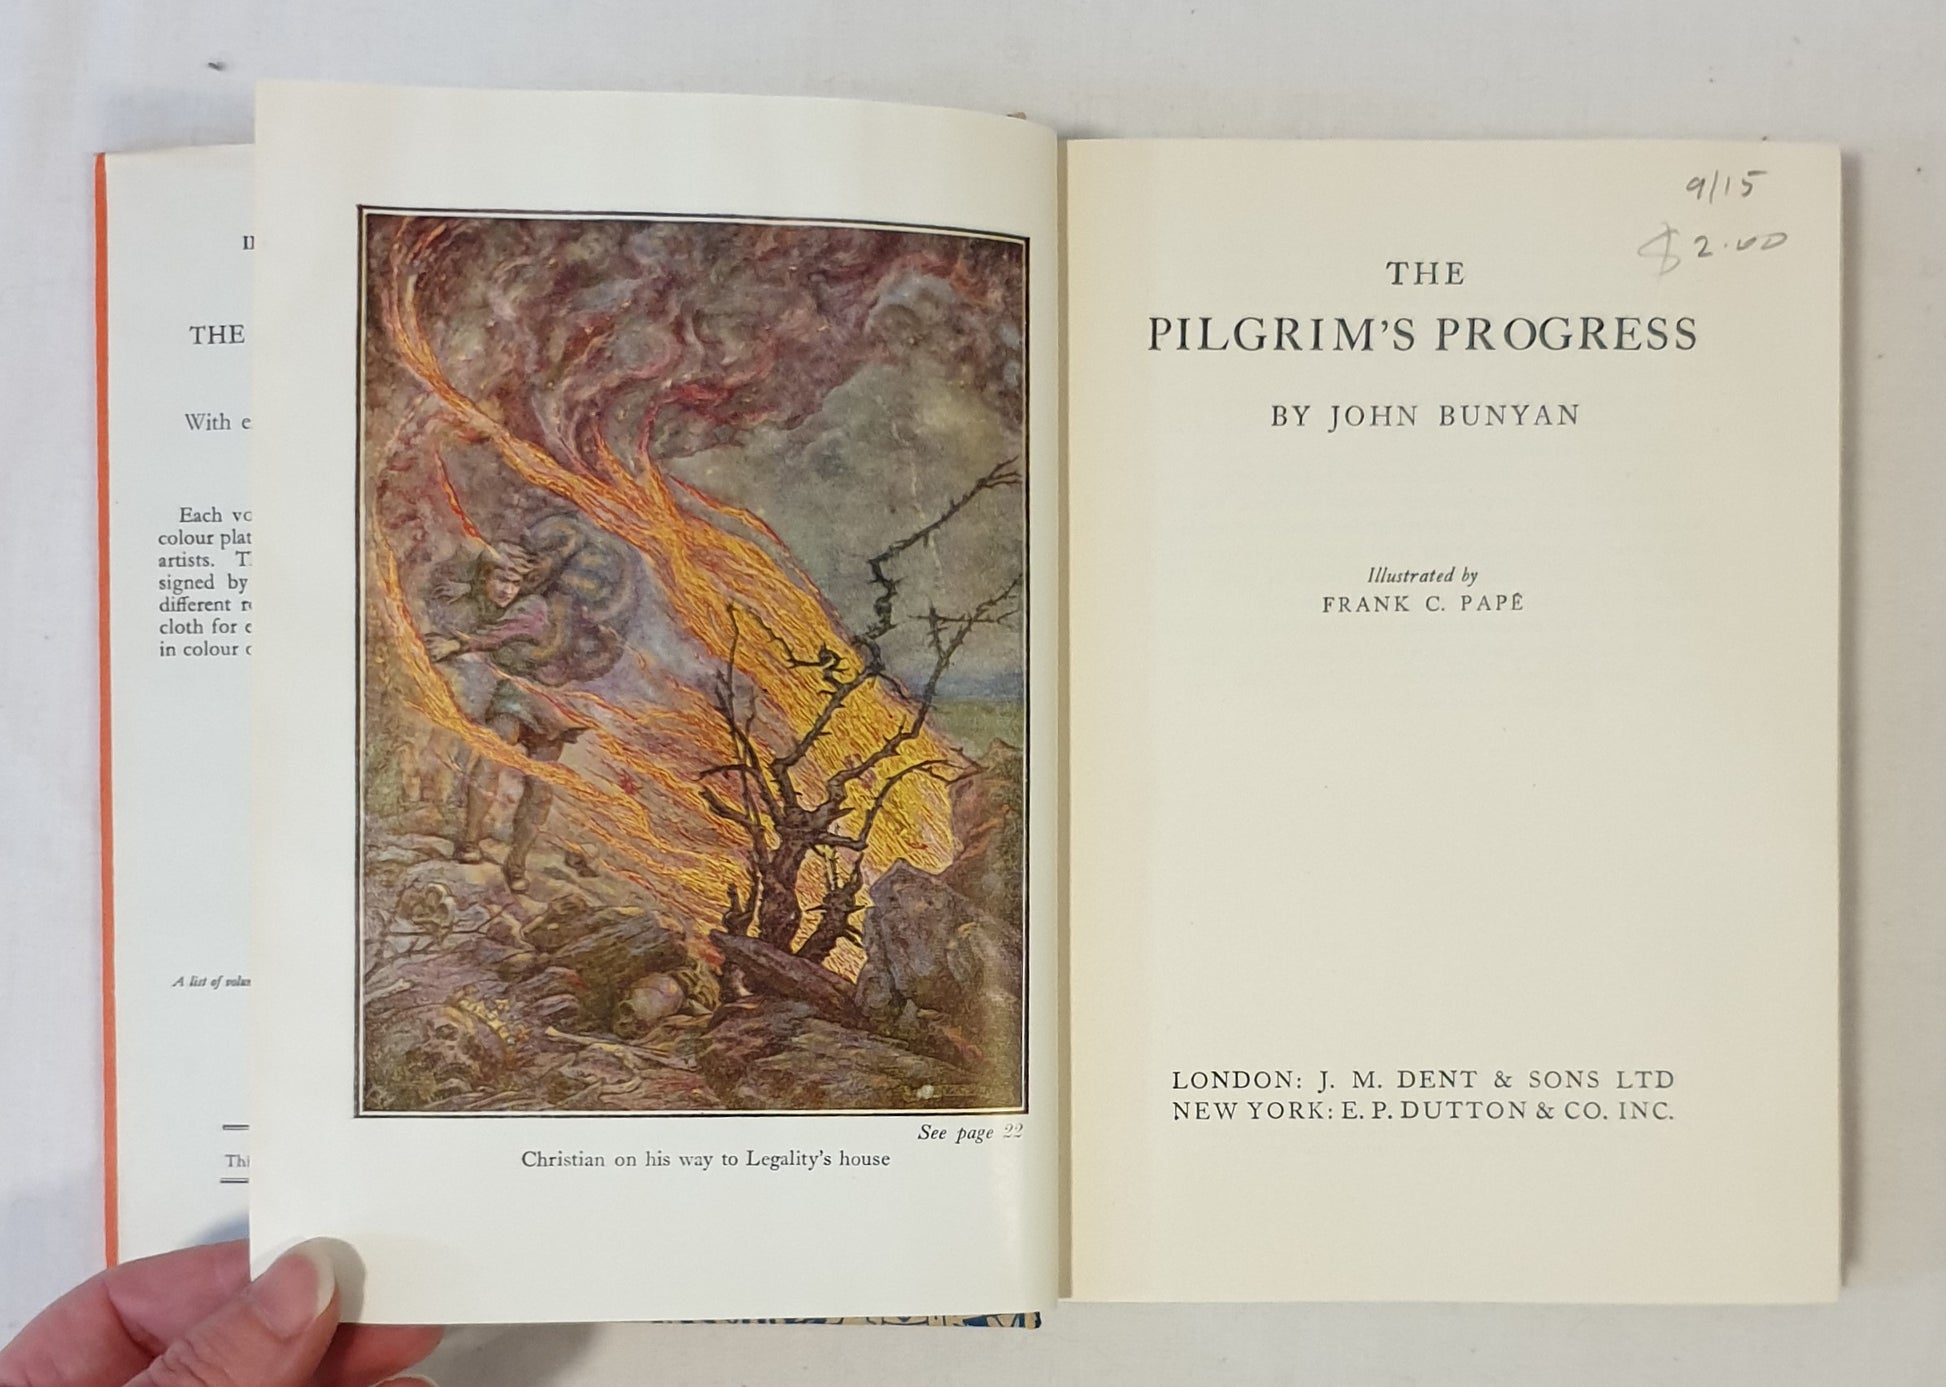 The Pilgrim's Progress  by John Bunyan  illustrated by Frank C. Pape